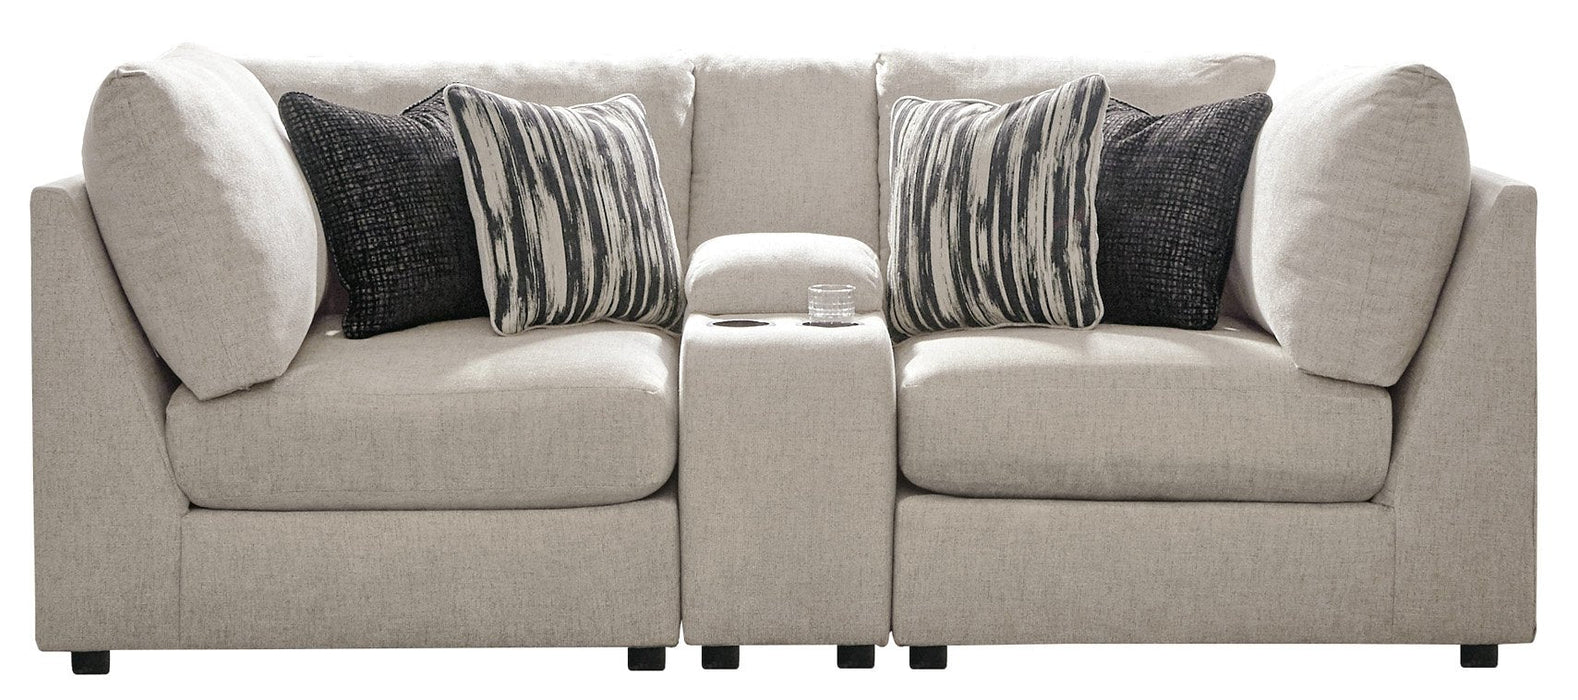 Kellway Bisque Console Living Room Set - Lara Furniture